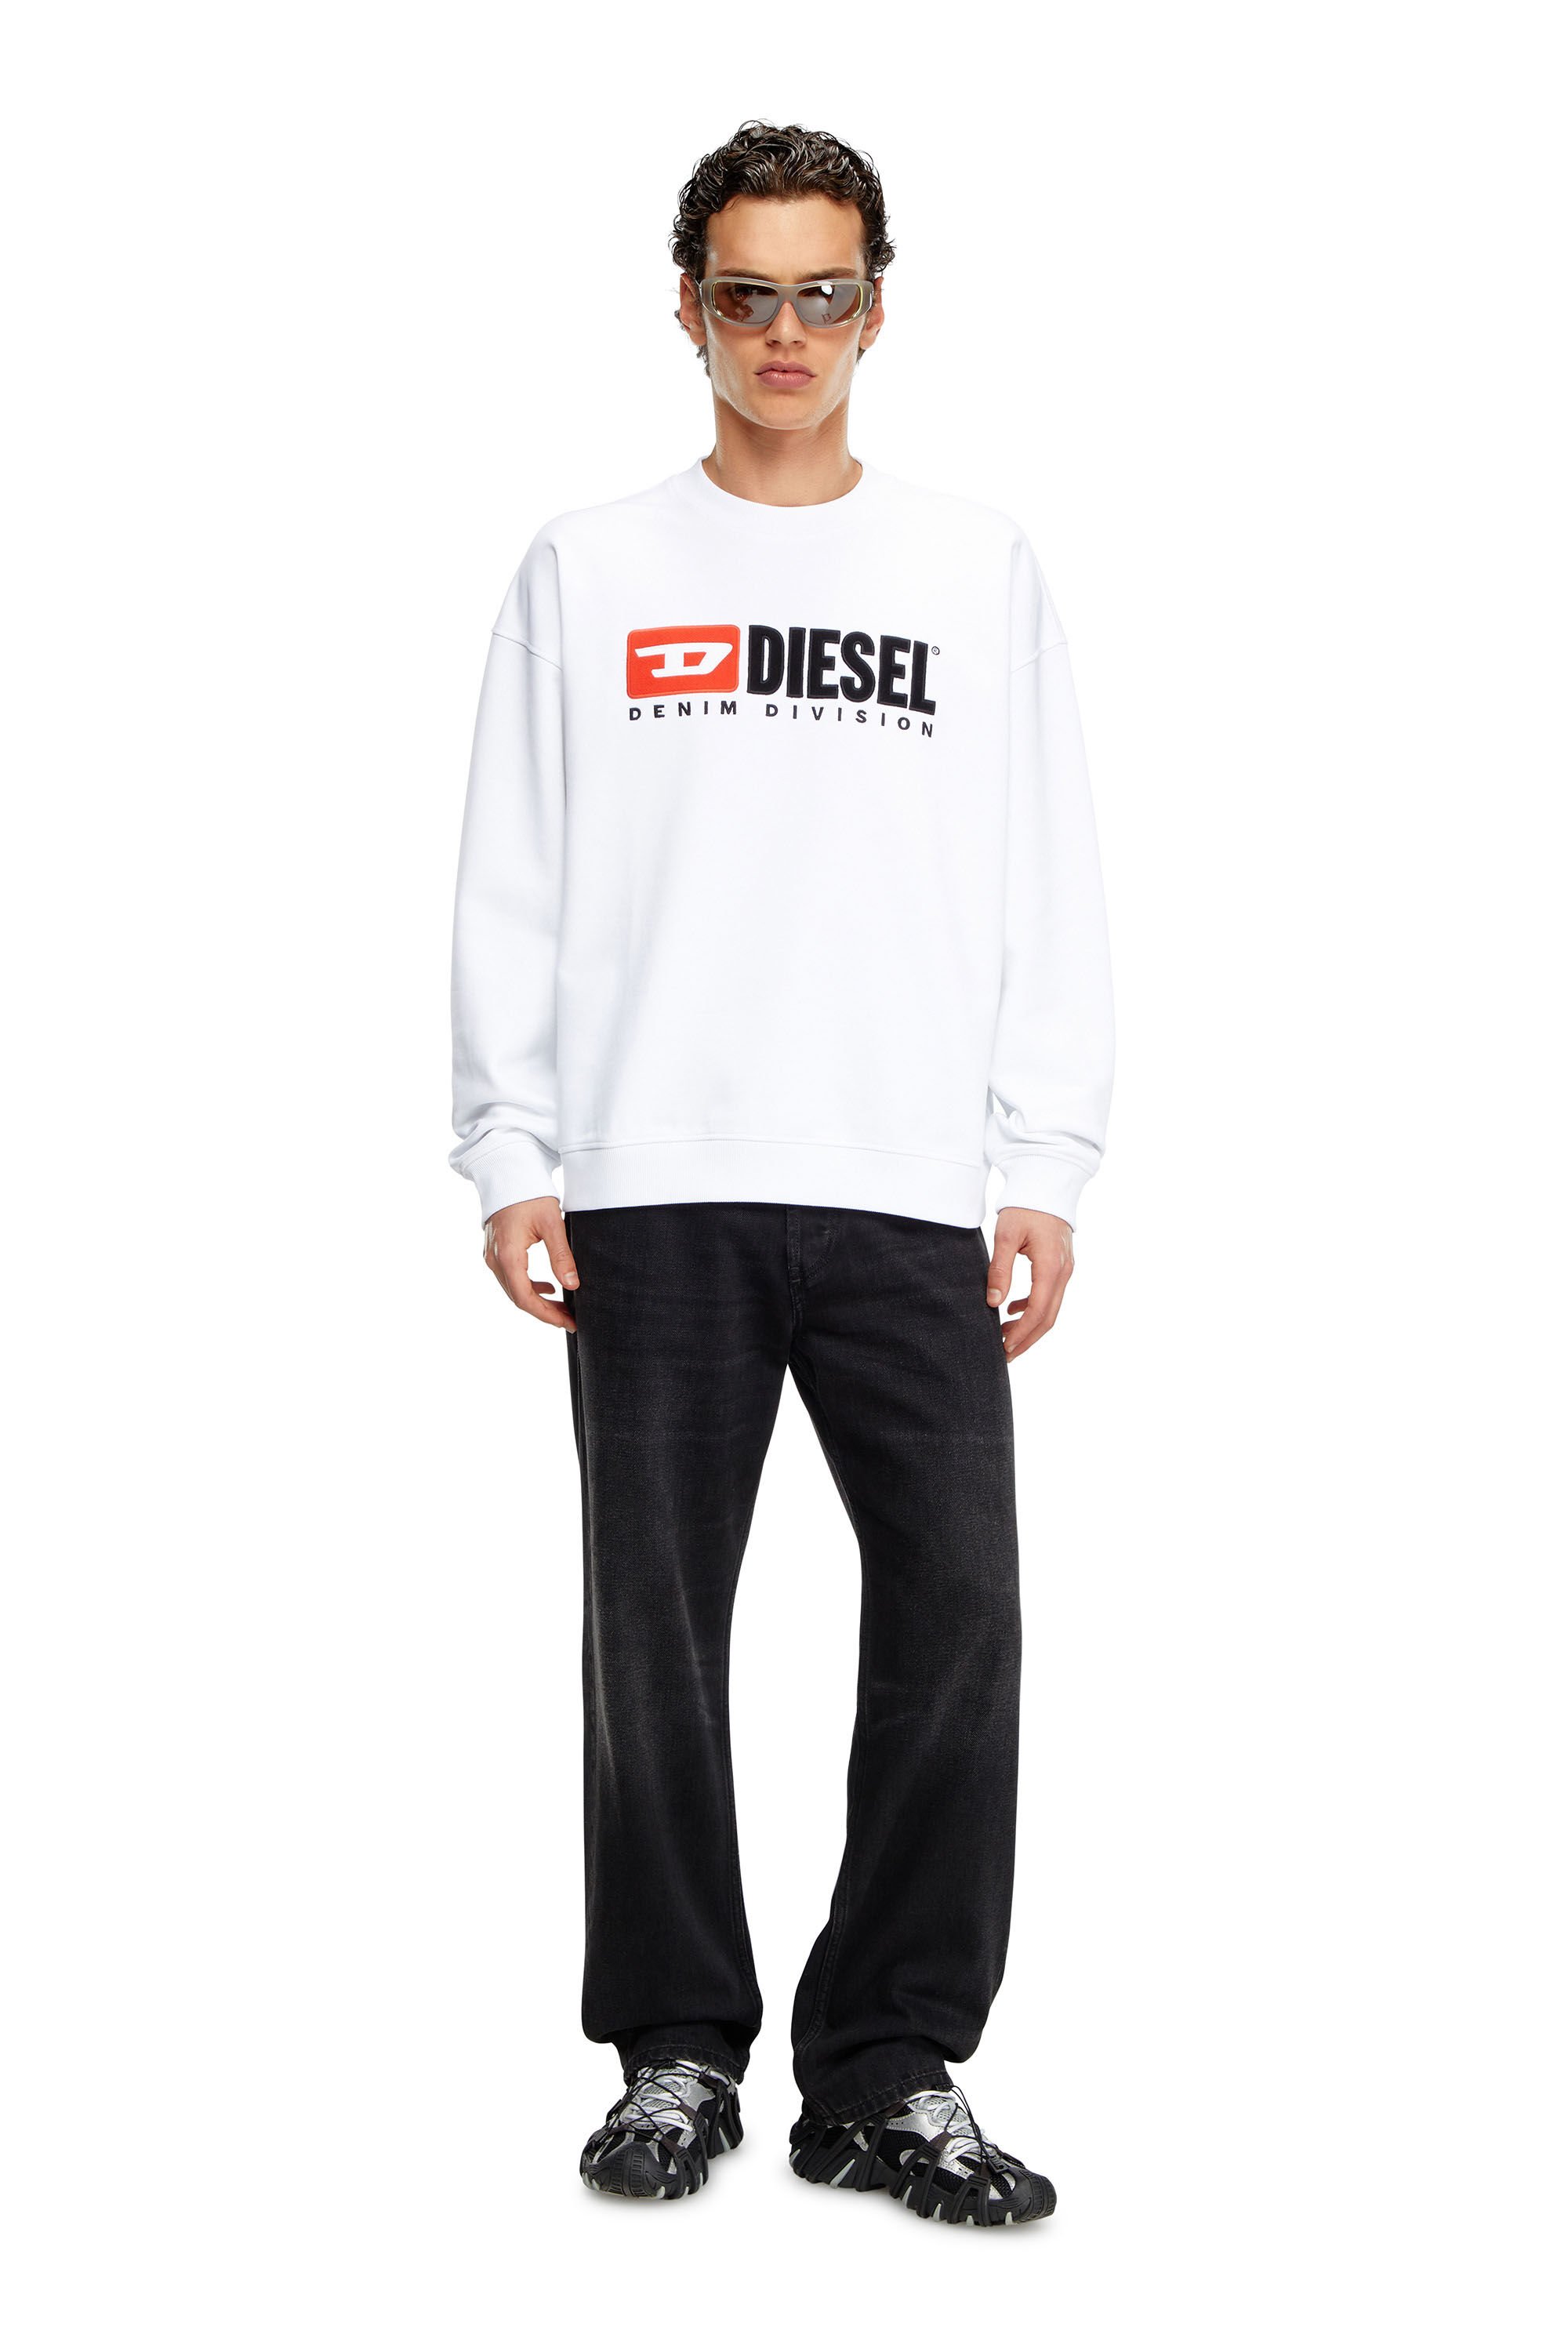 Diesel - S-BOXT-DIV, Man Sweatshirt with Denim Division logo in White - Image 1